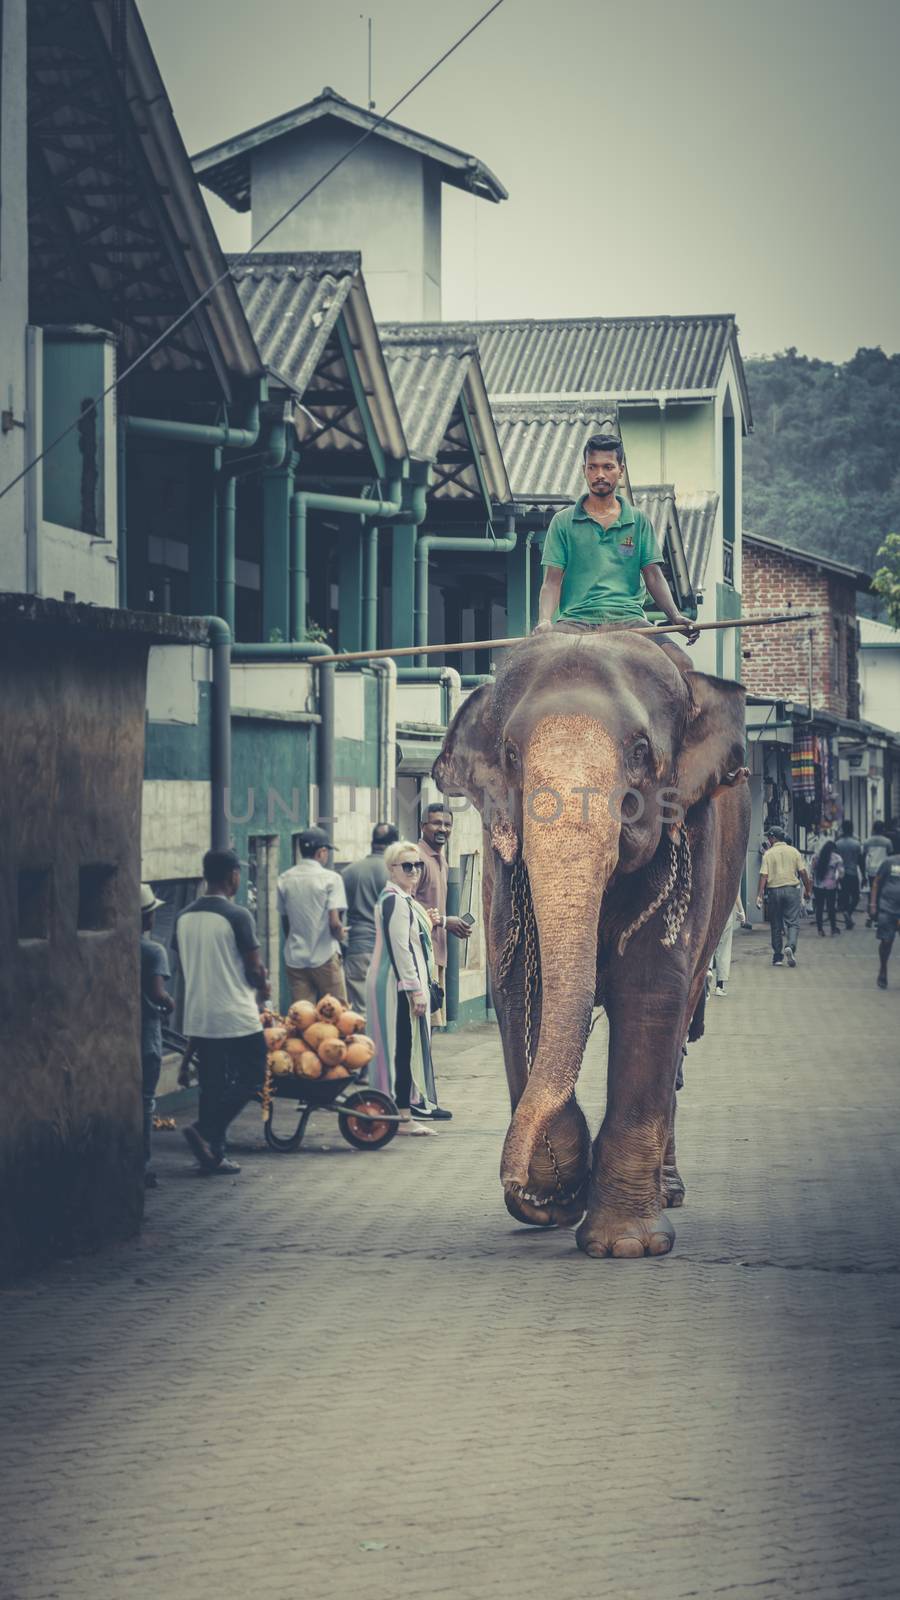 Riding an elephant in a street Sri Lanka